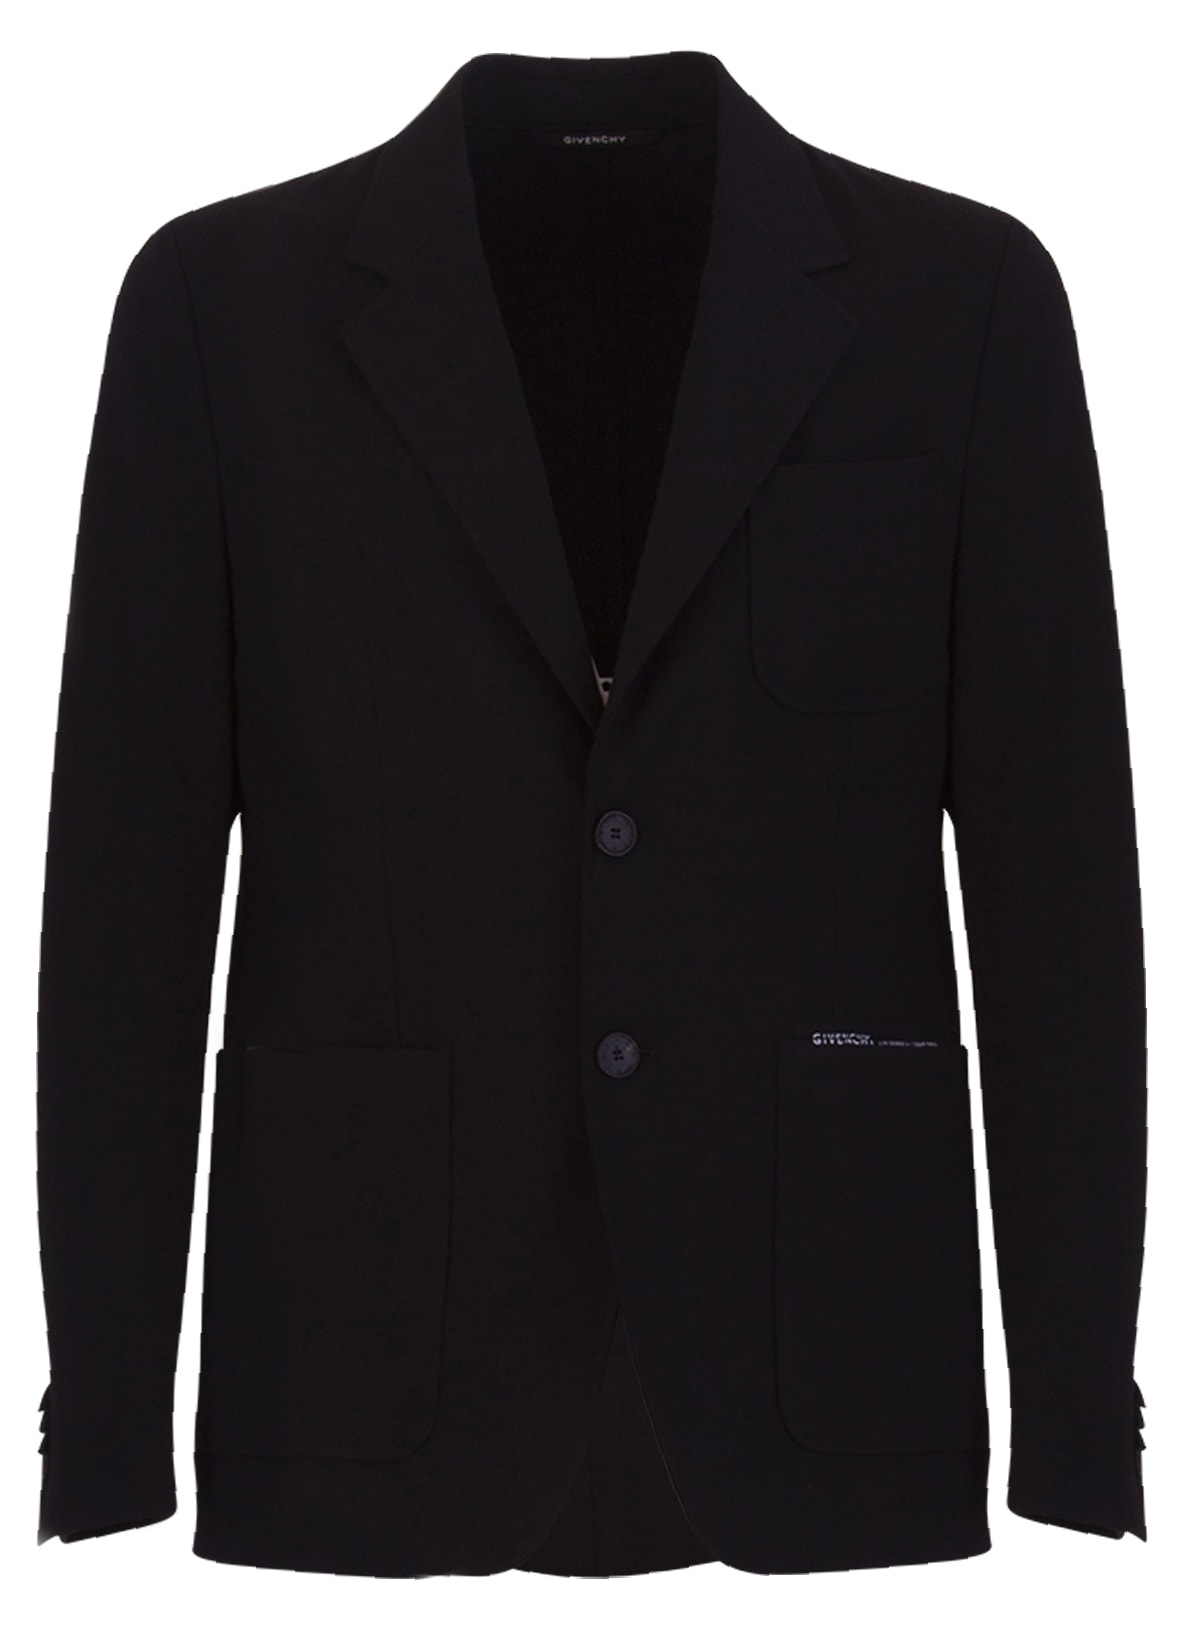 Givenchy Black Tailored Jacket